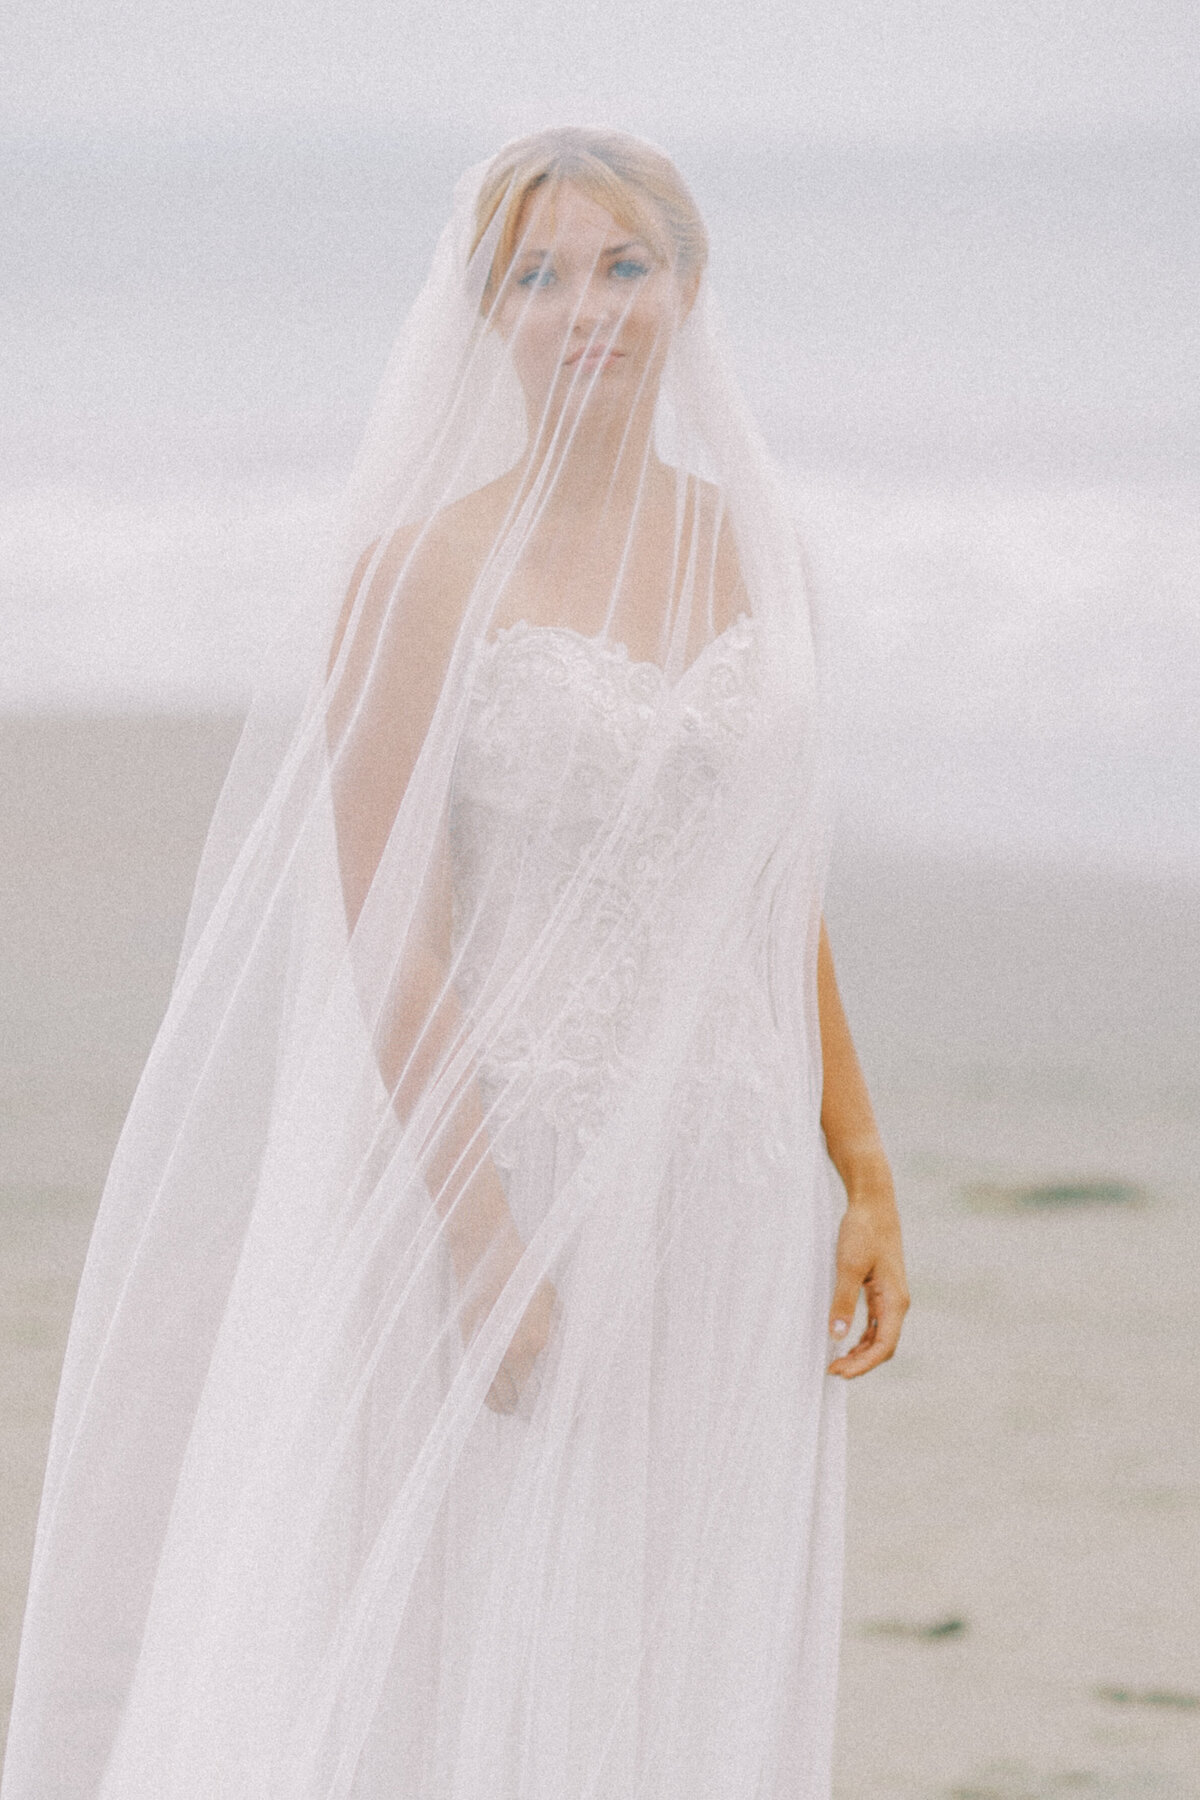 Point Reyes Elopement - Bay Area Luxury Wedding Photographer-68